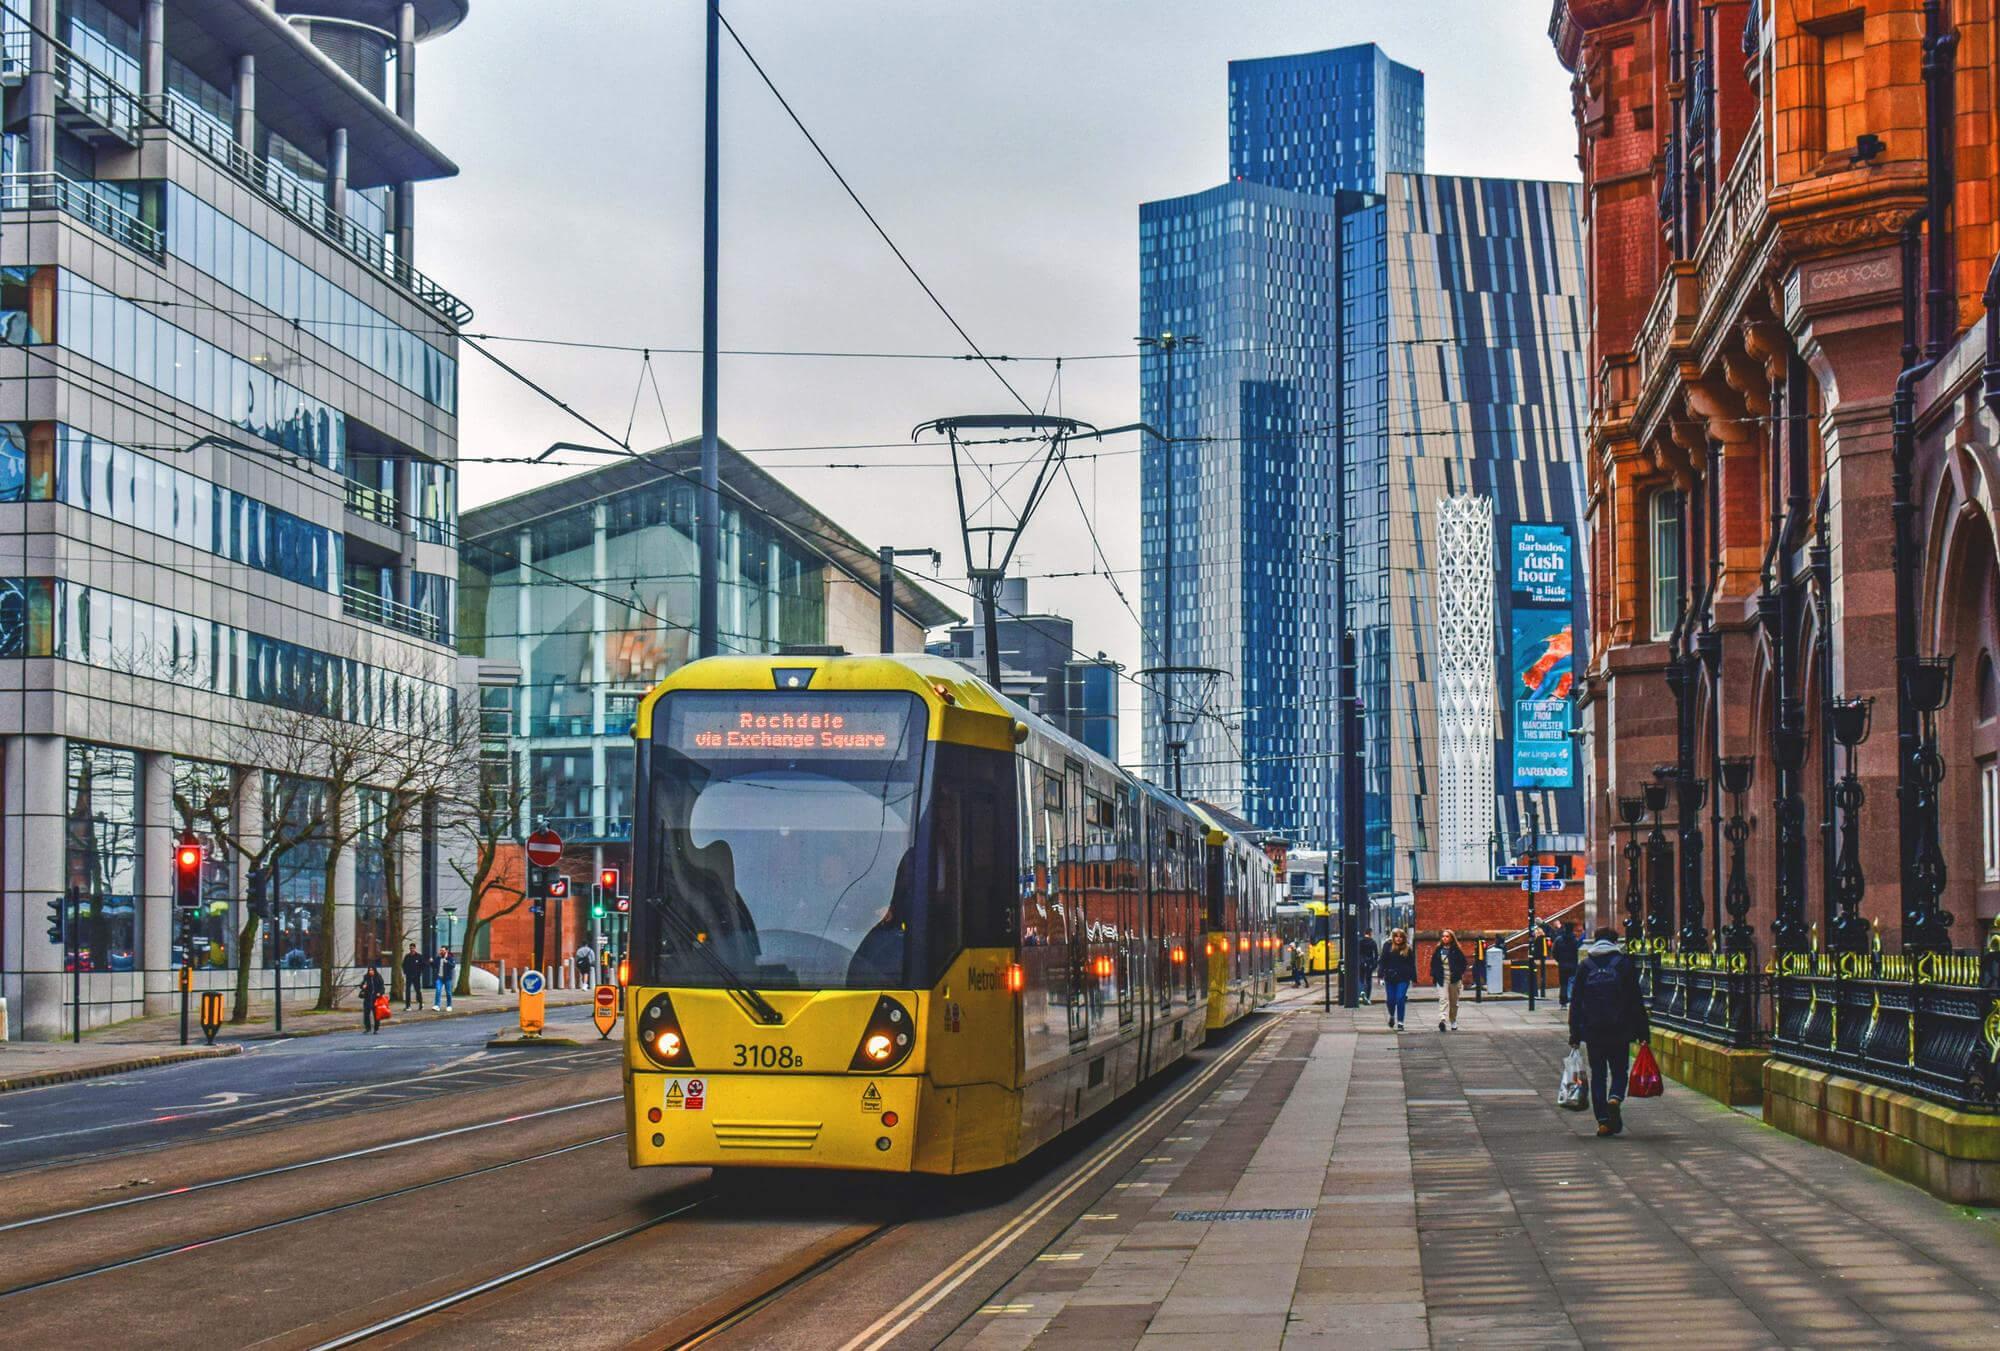 Manchester city centre, UK